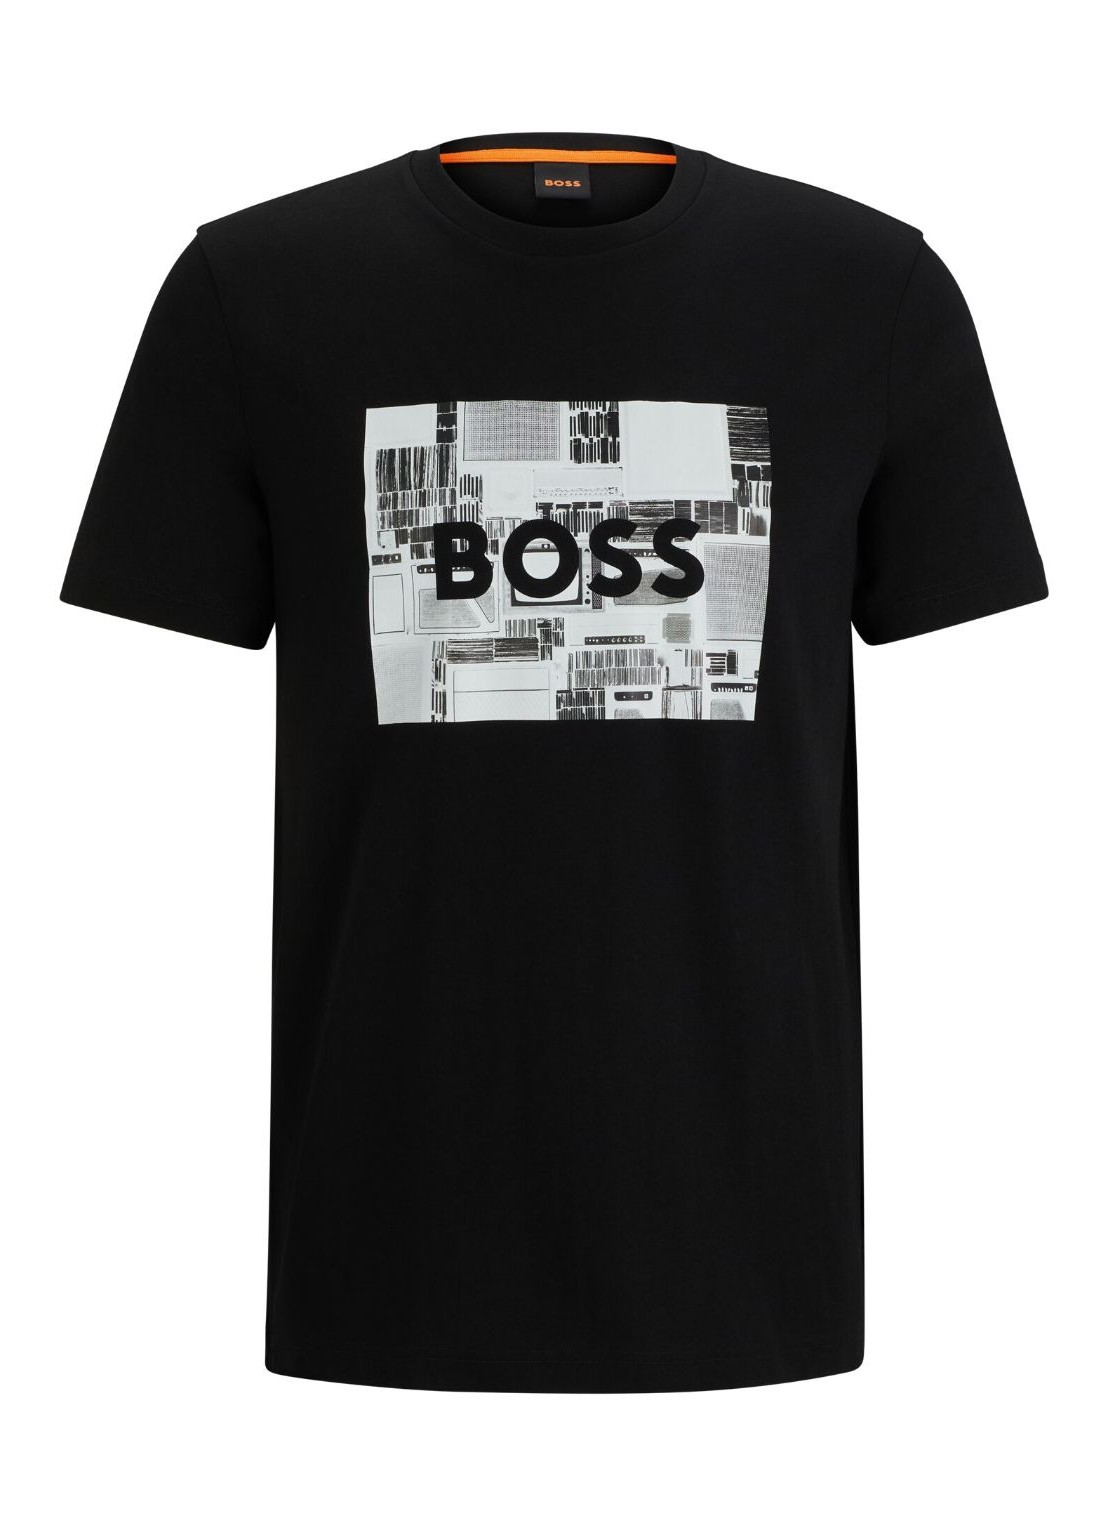 Camiseta boss t-shirt manteeheavyboss - 50510009 001 talla XXL
 